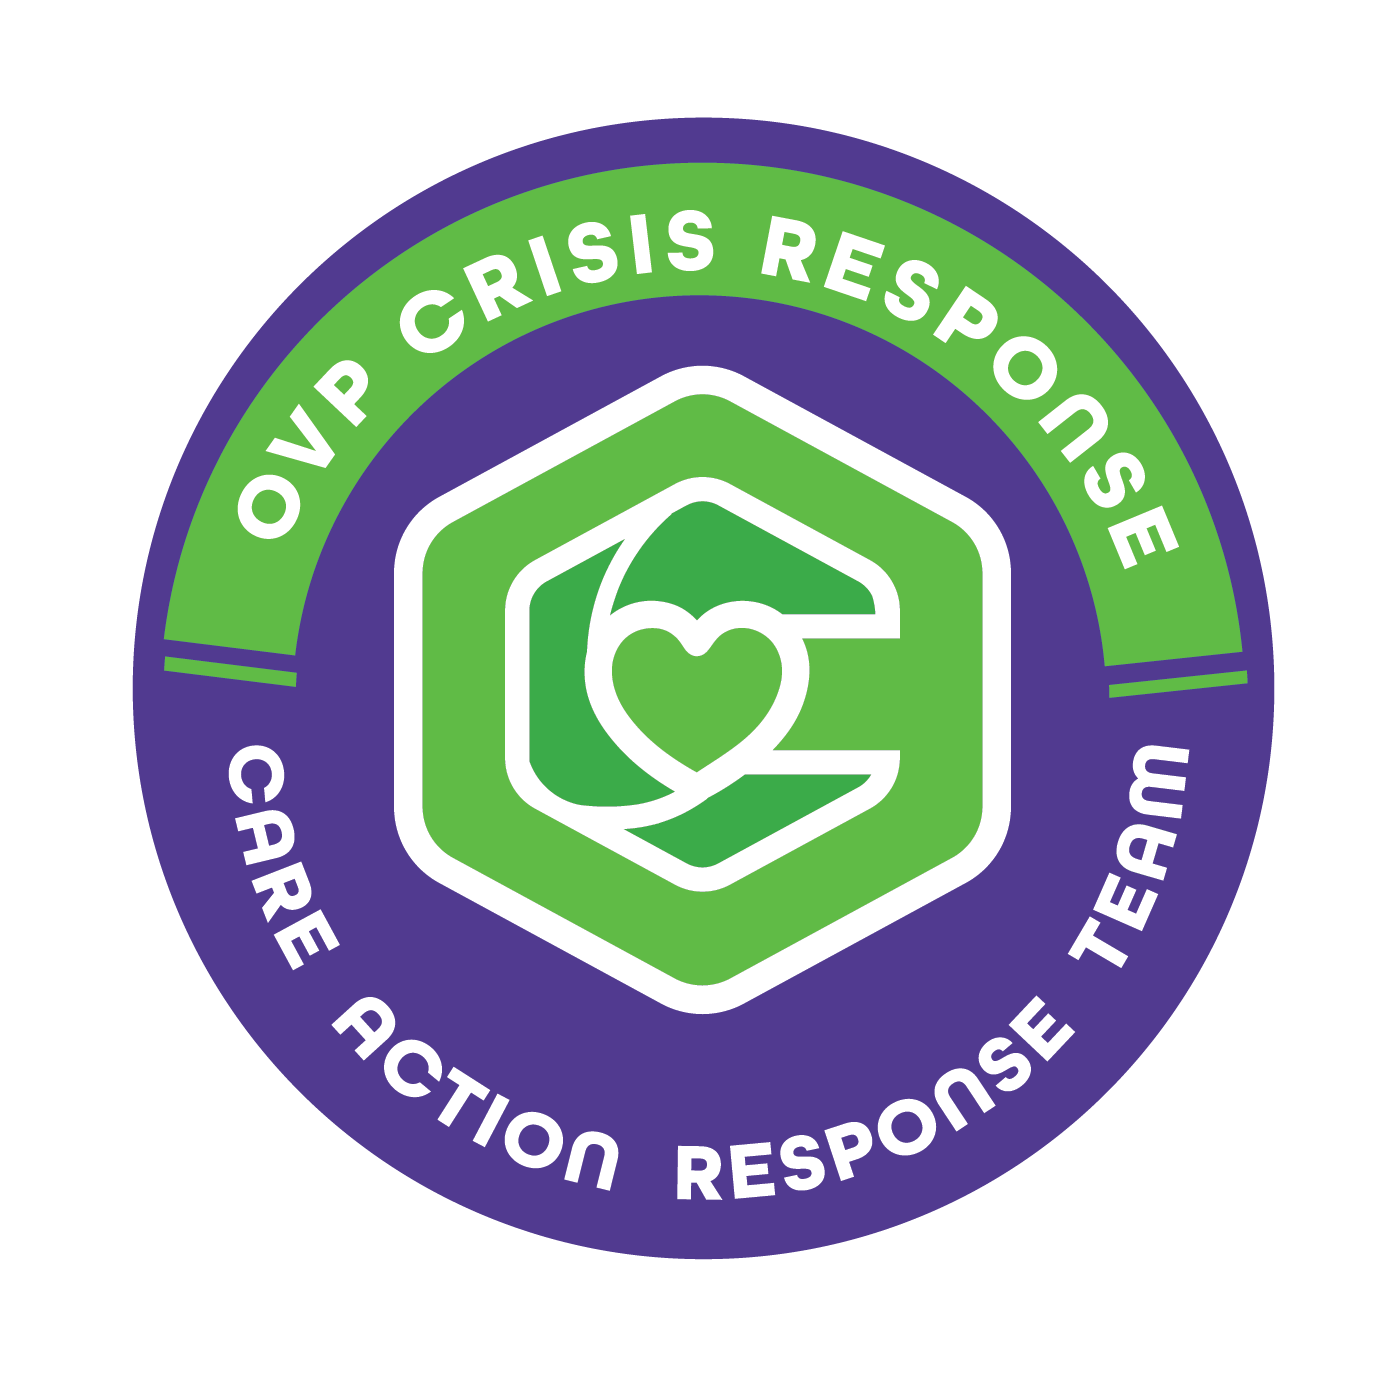 Care Action Response Team Logo